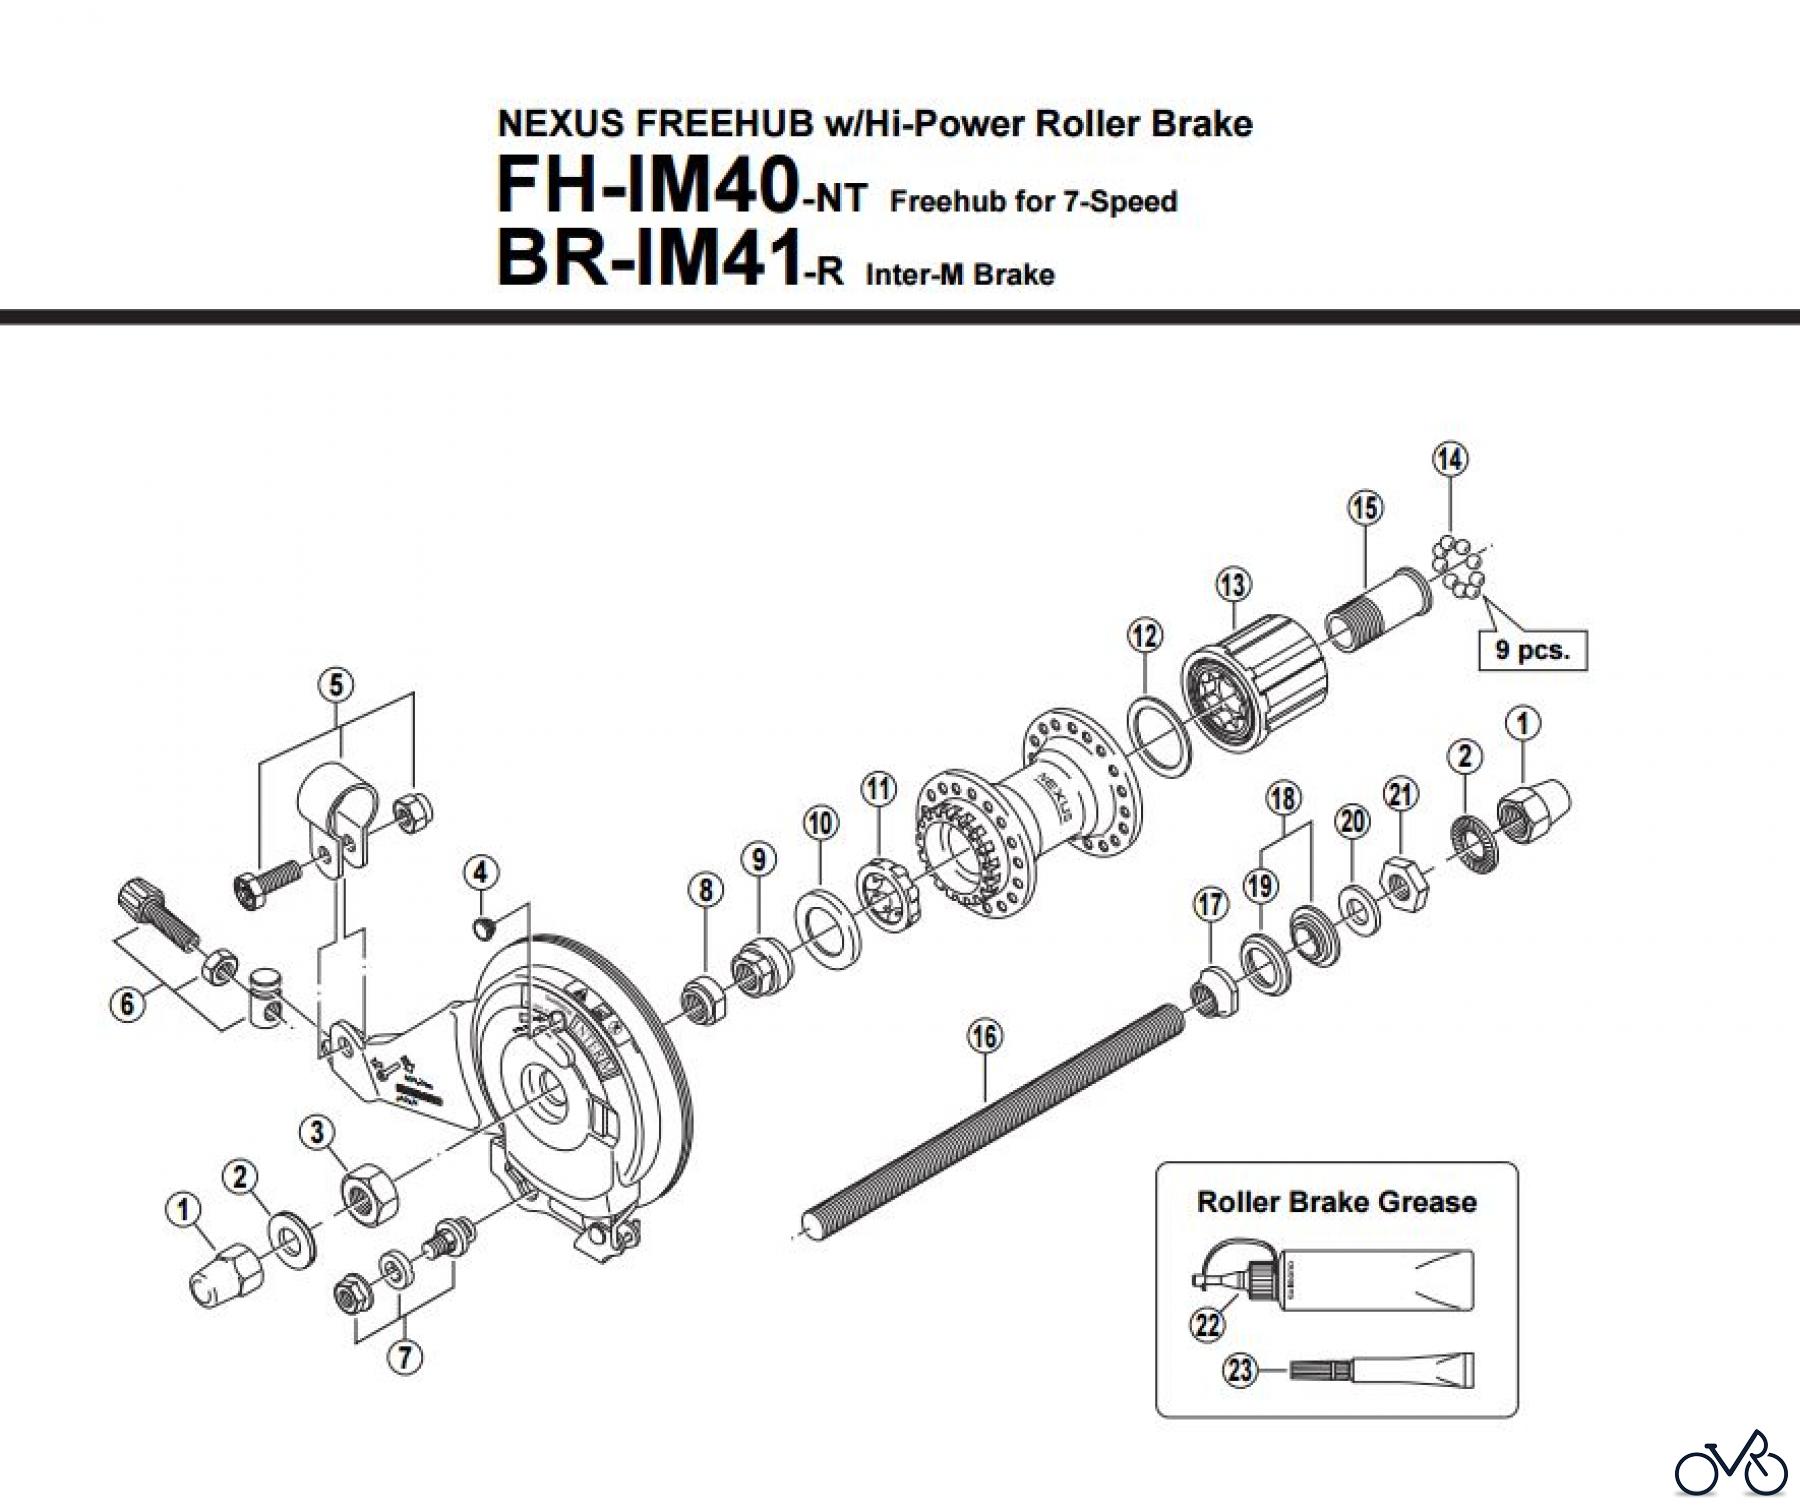  Shimano FH Free Hub - Freilaufnabe FH-IM40- BRIM41 -1606C NEXUS Kassettennabe w/Hi-Power Roller Brake 7-fach